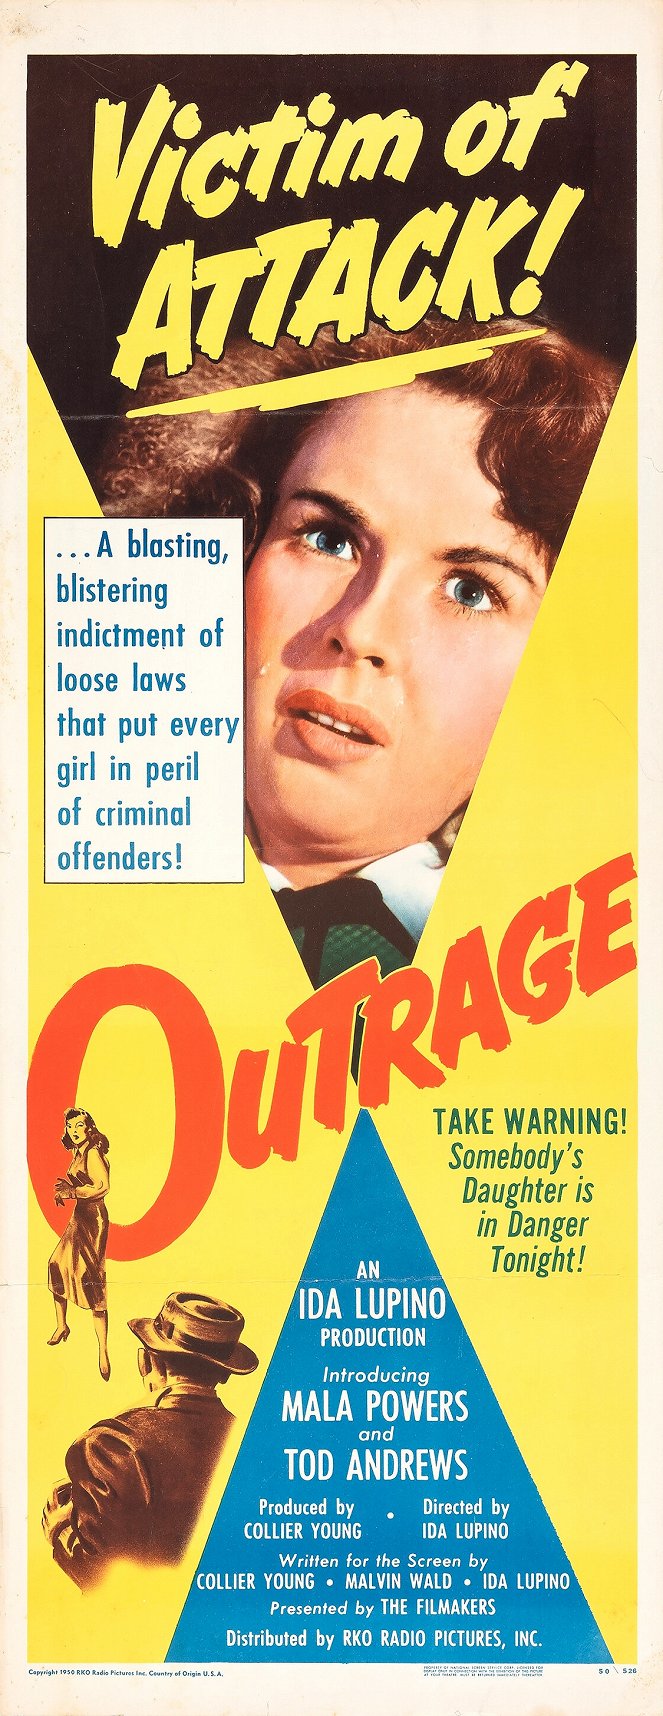 Outrage - Plakaty